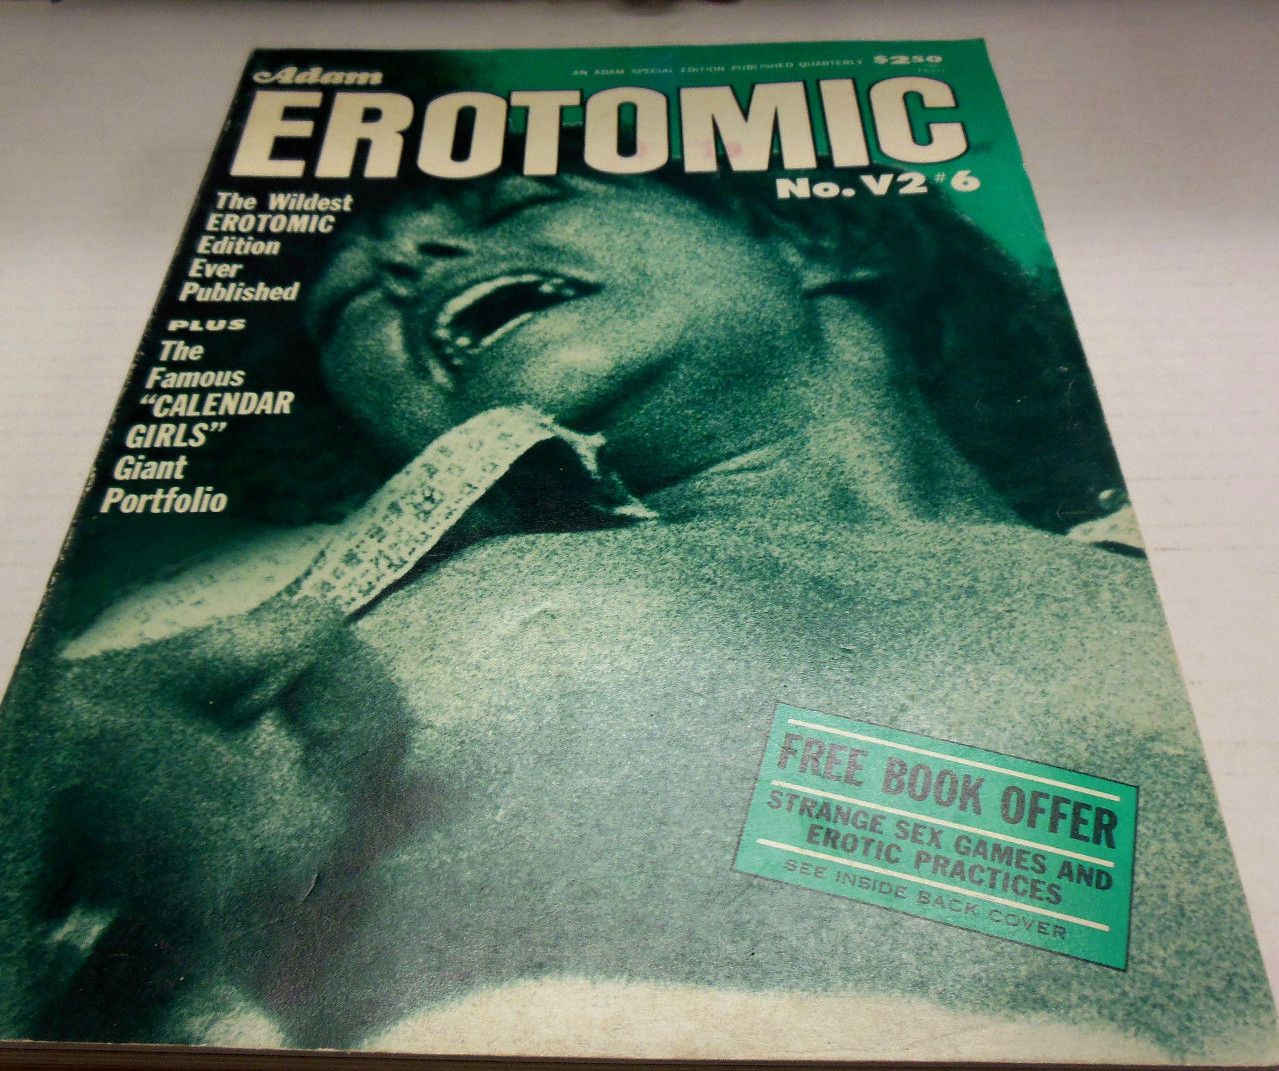 Adam Erotomic Vol. 2 # 6 magazine back issue Adam Erotomic magizine back copy 